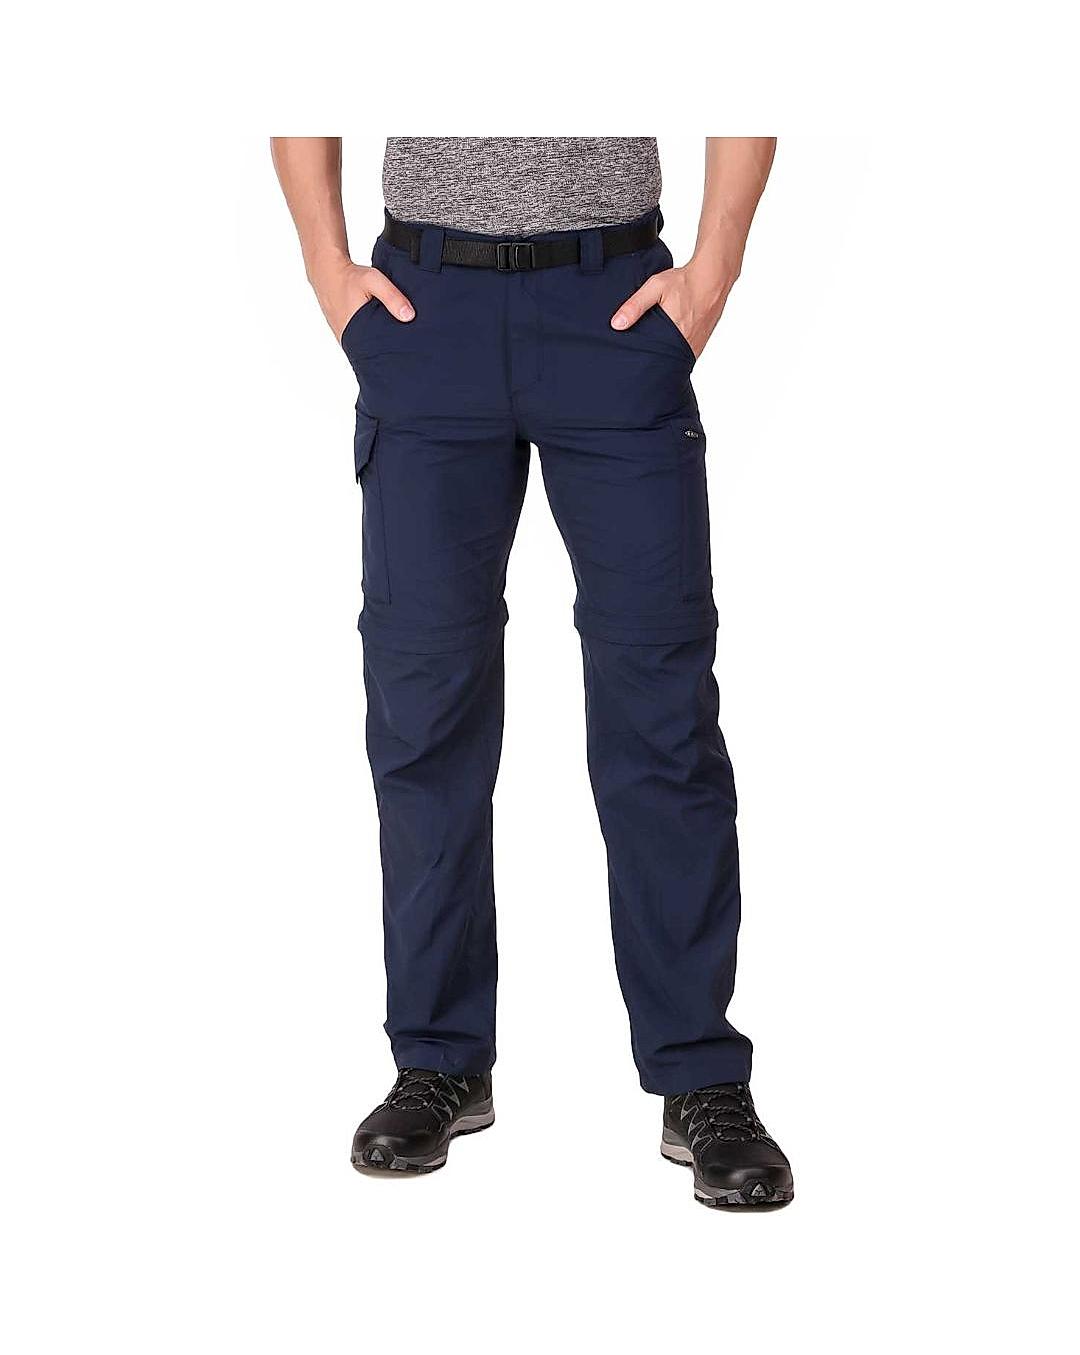 Hiauspor Men's Convertible Pants Quick Dry Zip Off Lightweight for Hiking  Fishing Outdoor Safari with 6 Pockets Black XXL - Walmart.com